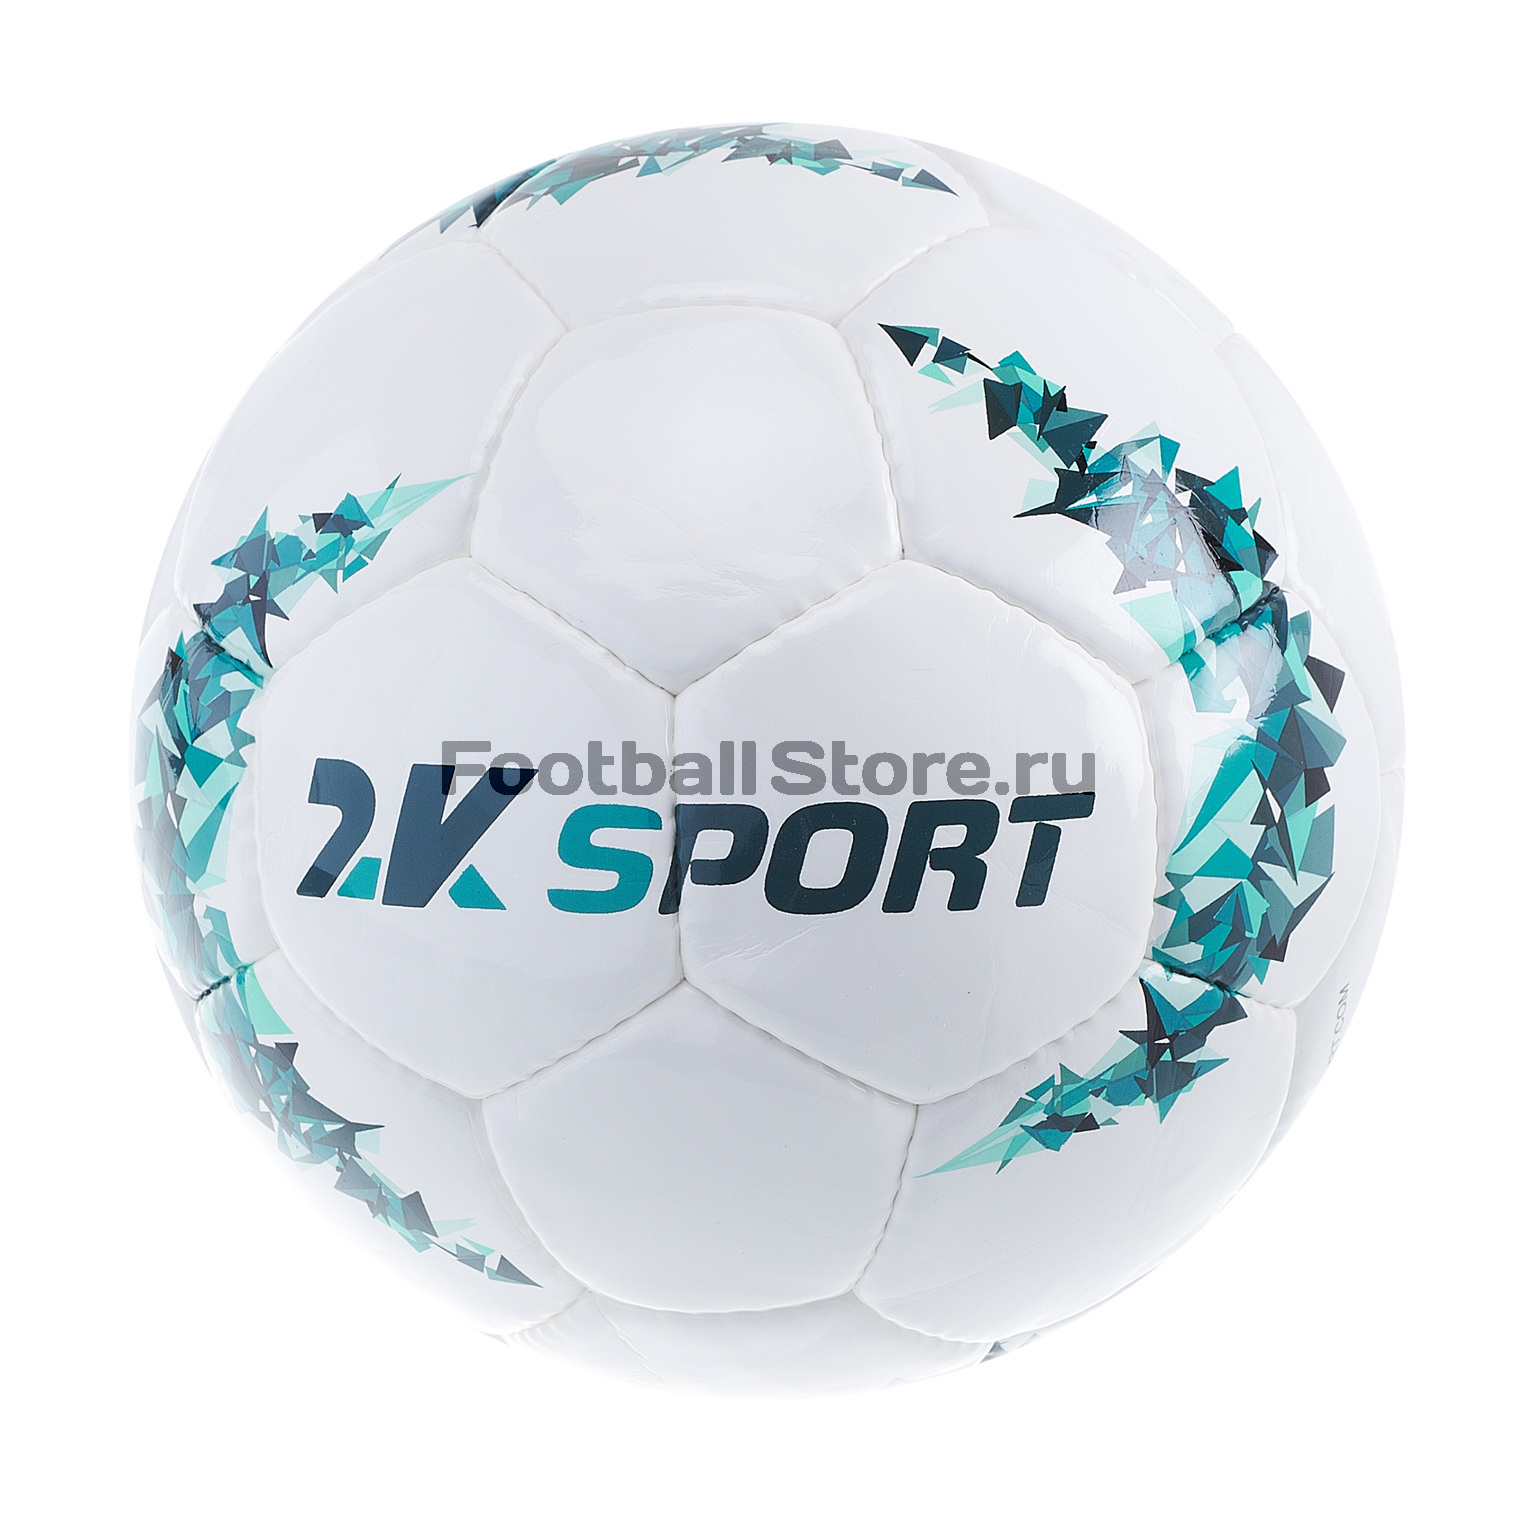 Футзальный мяч 2К Sport Crystal Prime Sala 127094